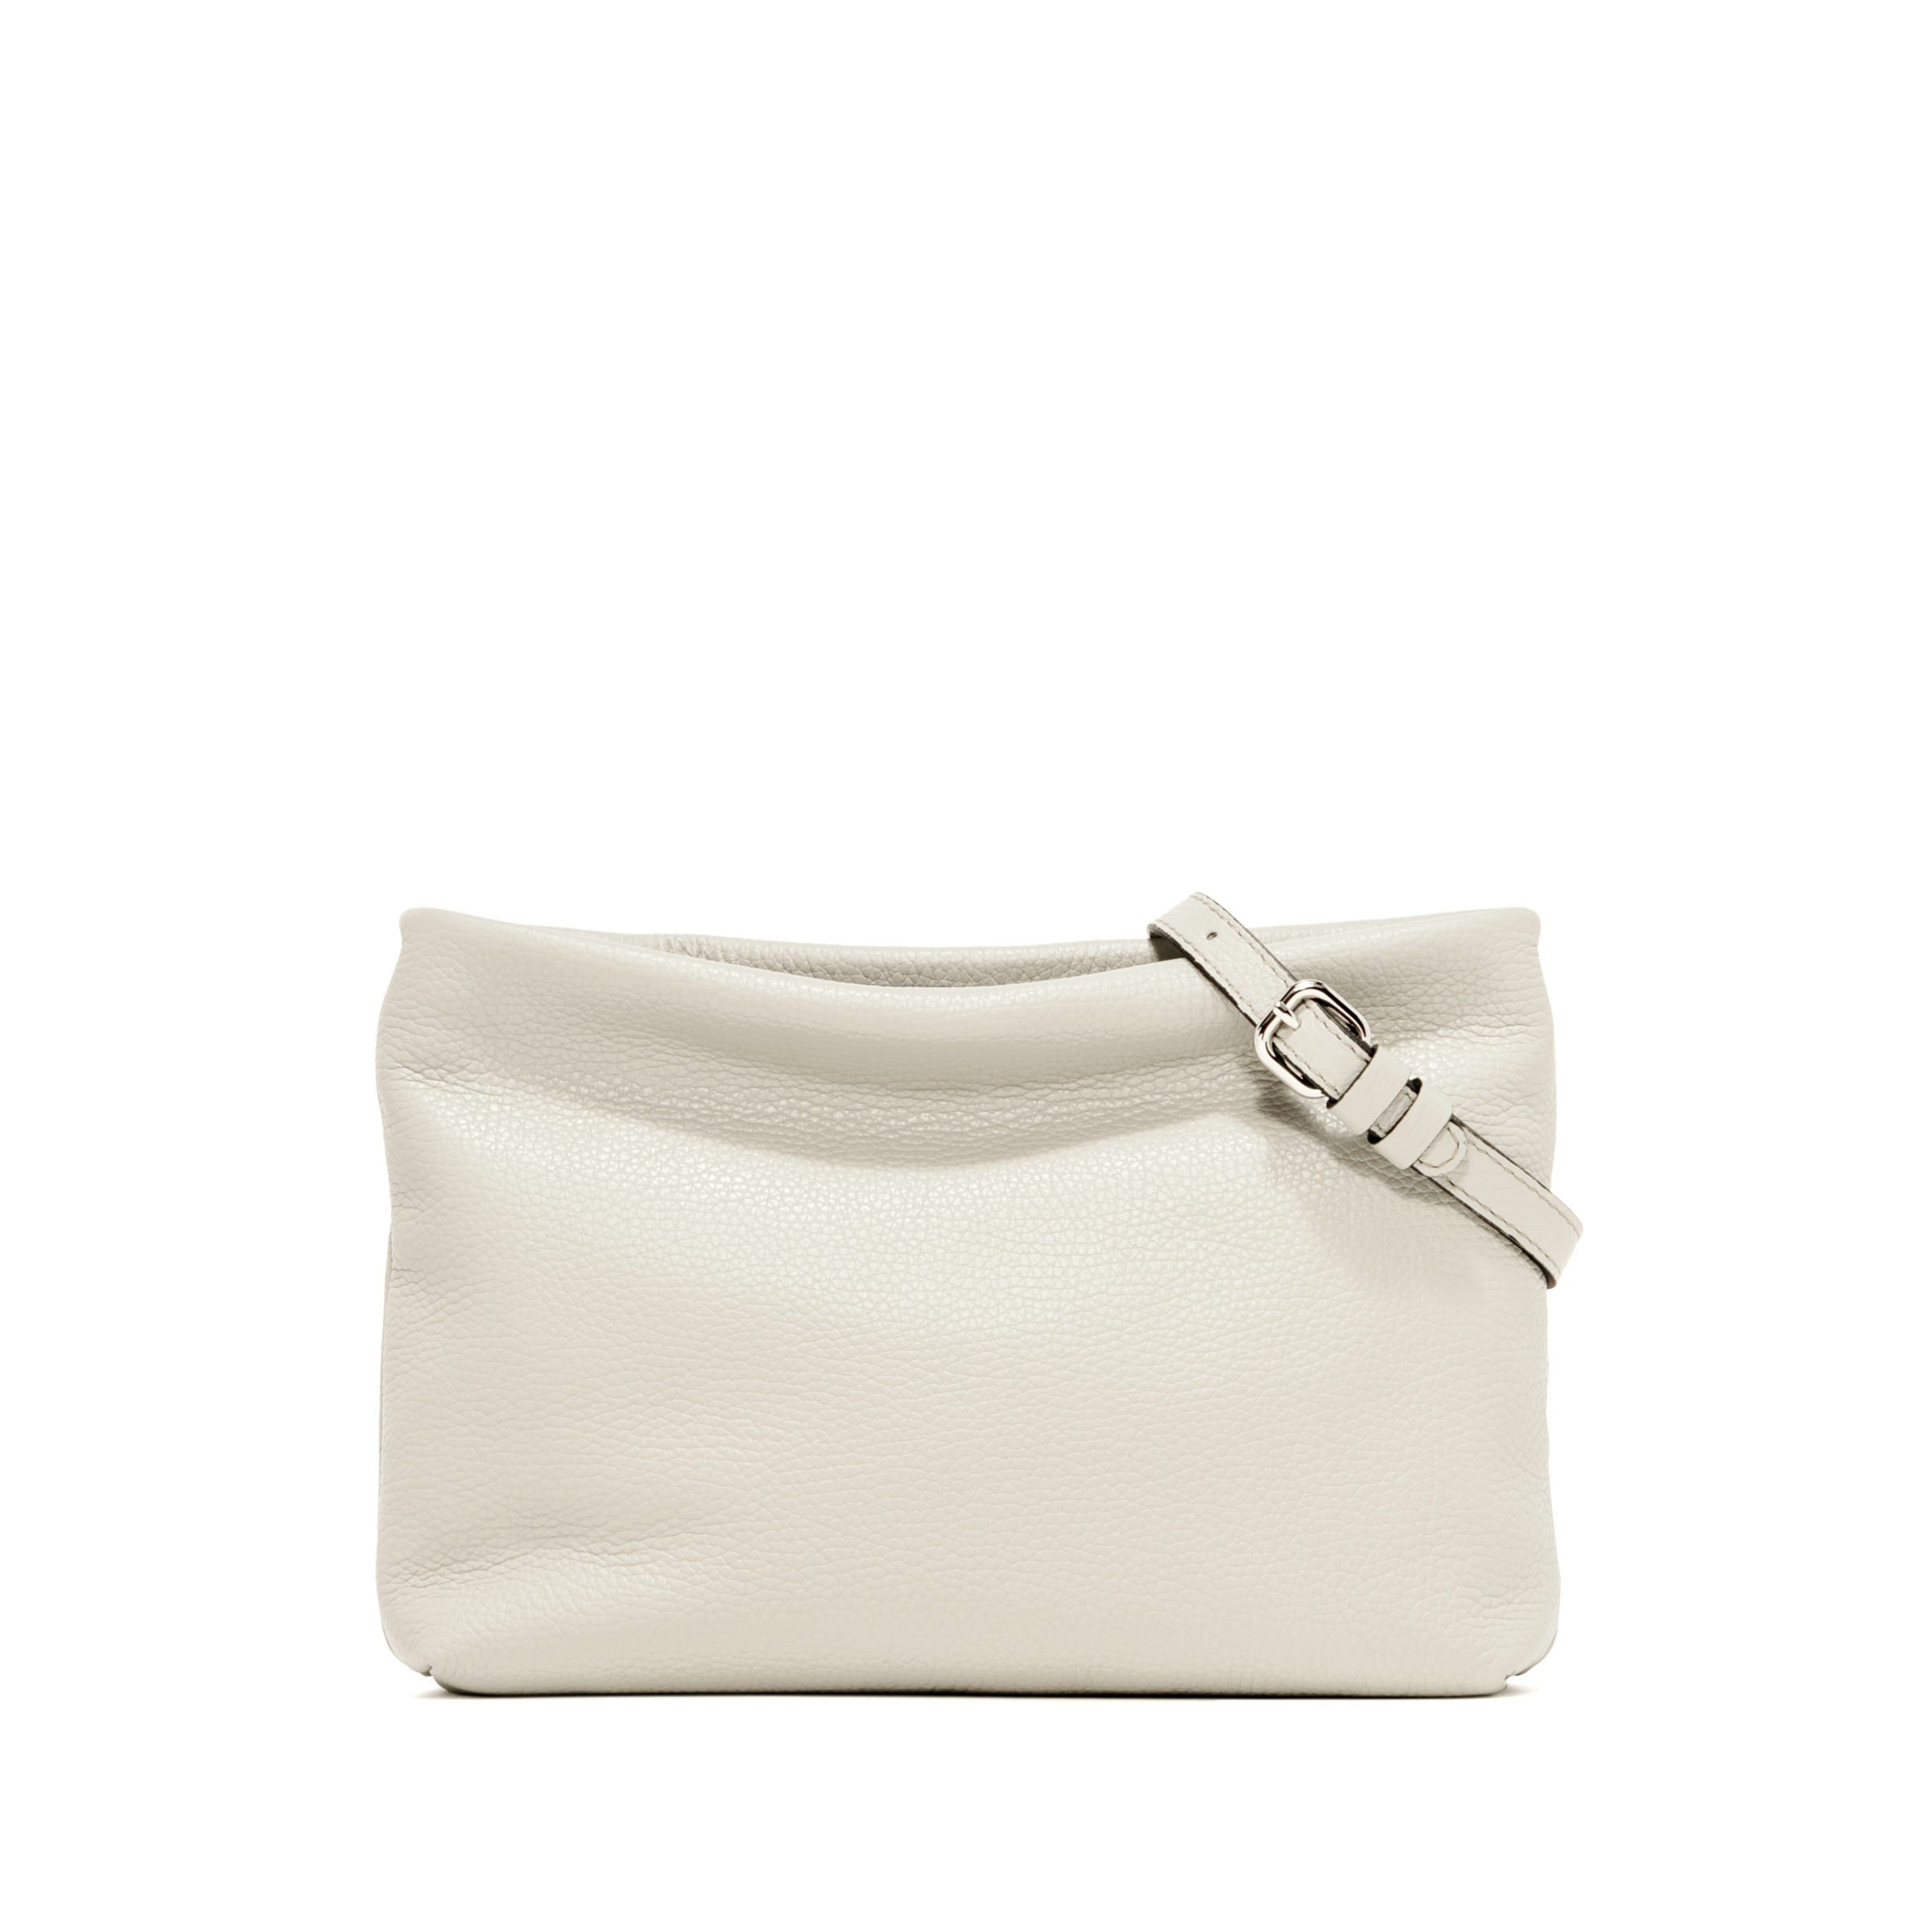 Gianni Chiarini - Brenda leather bag, White, large image number 1